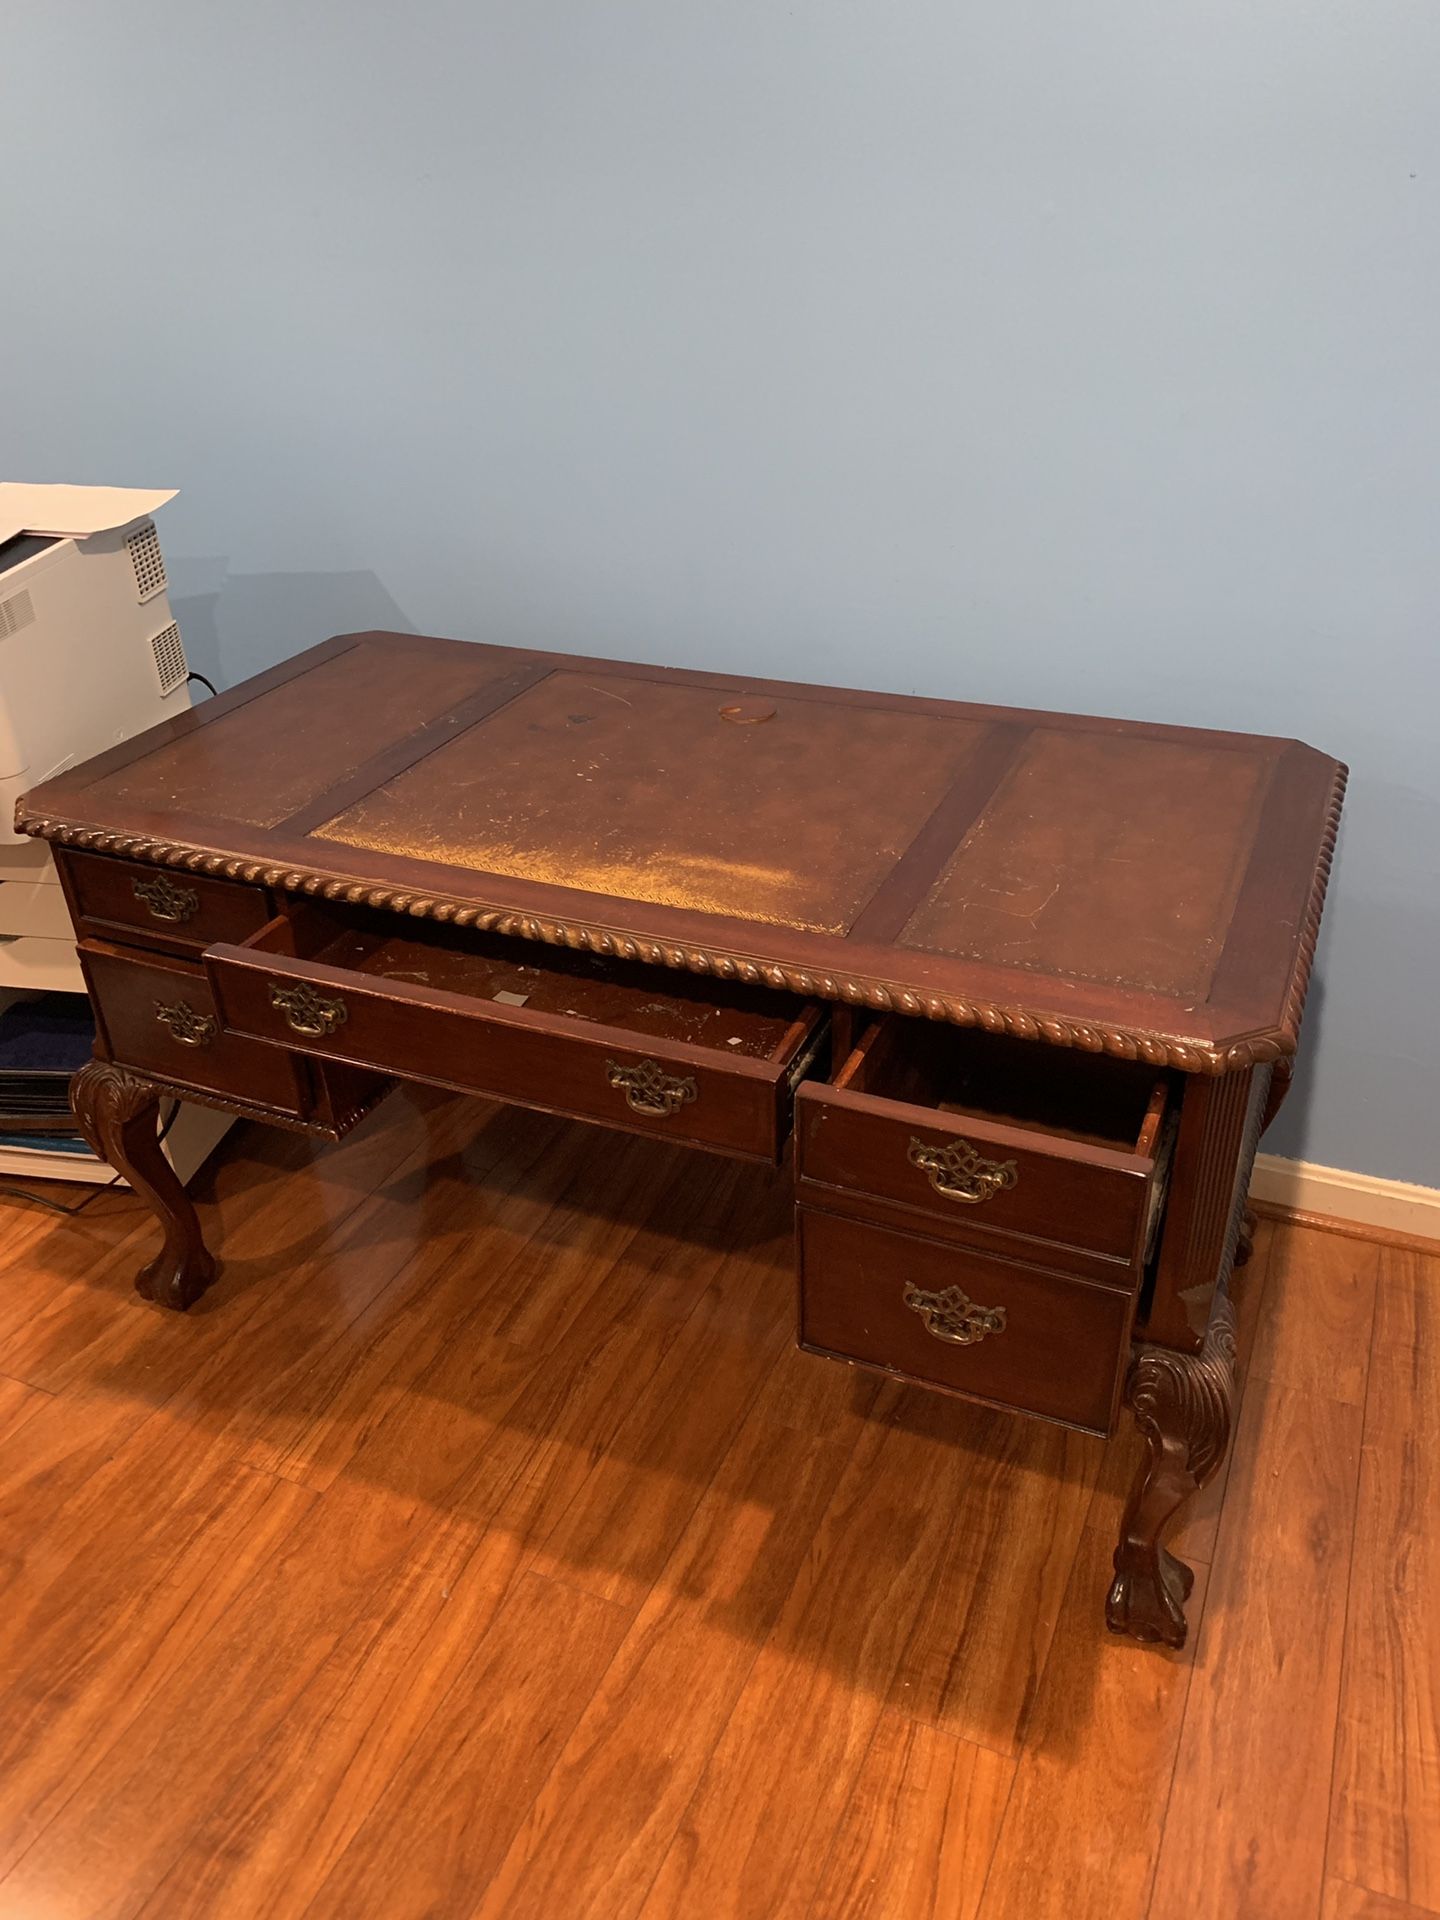 Executive solid wood desk - cherry oak color